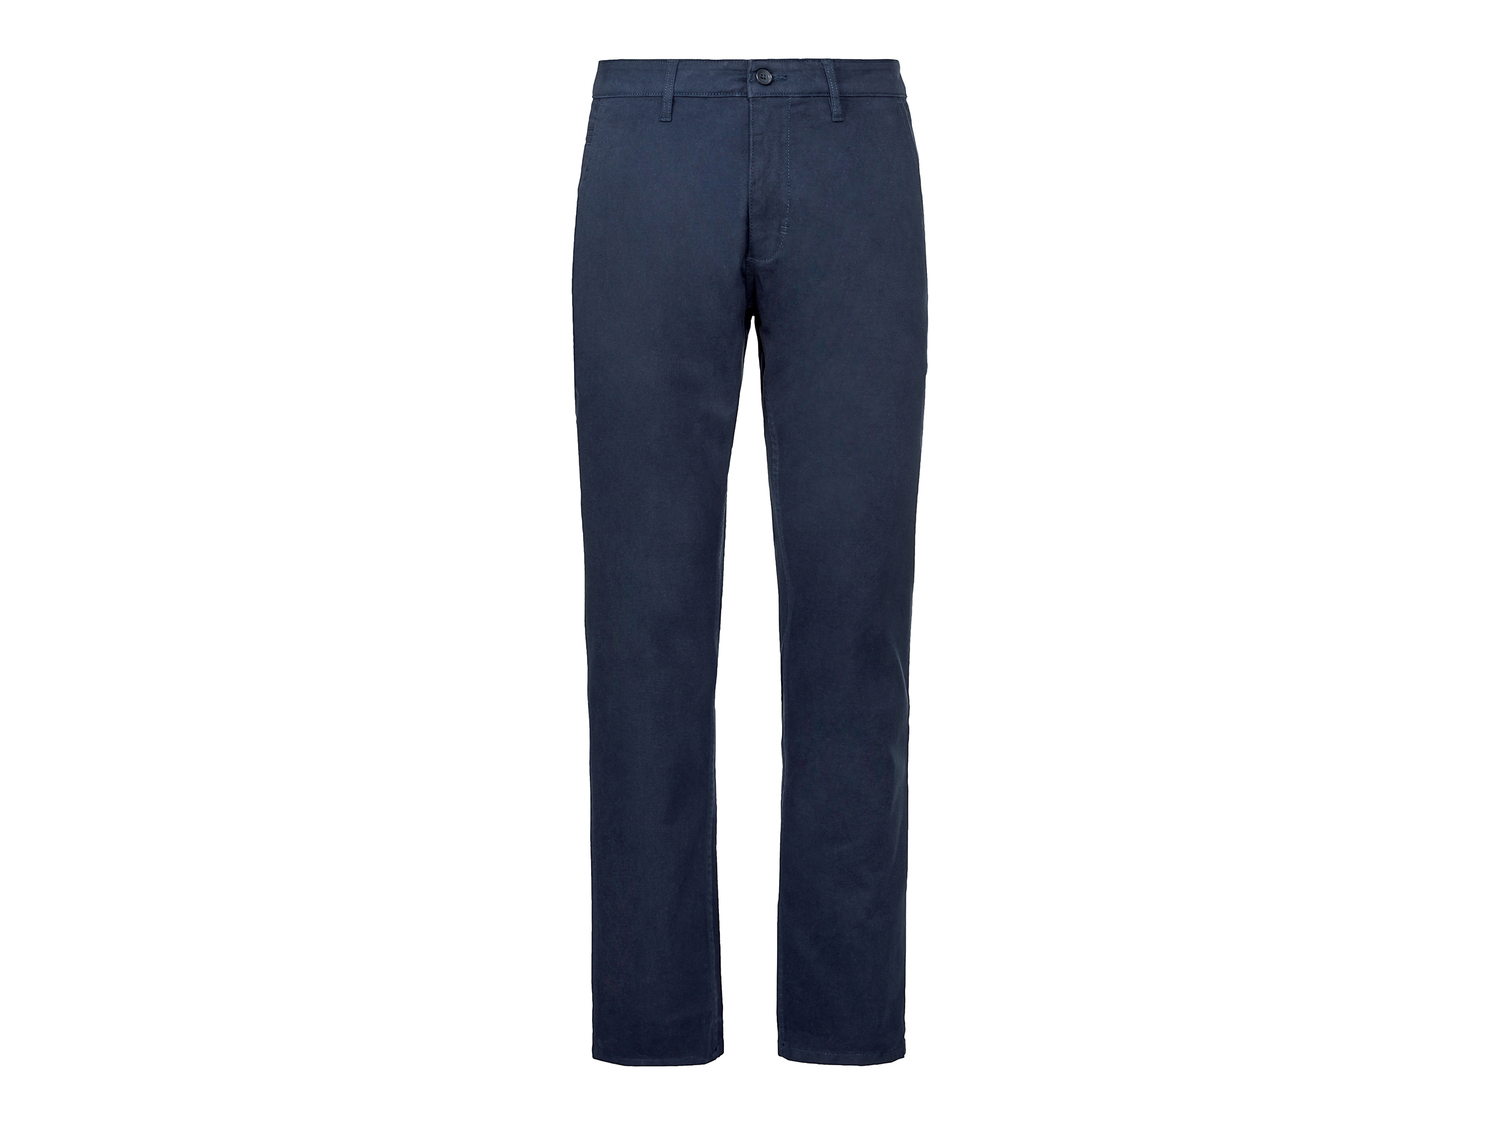 Pantaloni Slim Fit da uomo Livergy, prezzo 12.99 &#8364; 
Misure: 48-54
Taglie ...